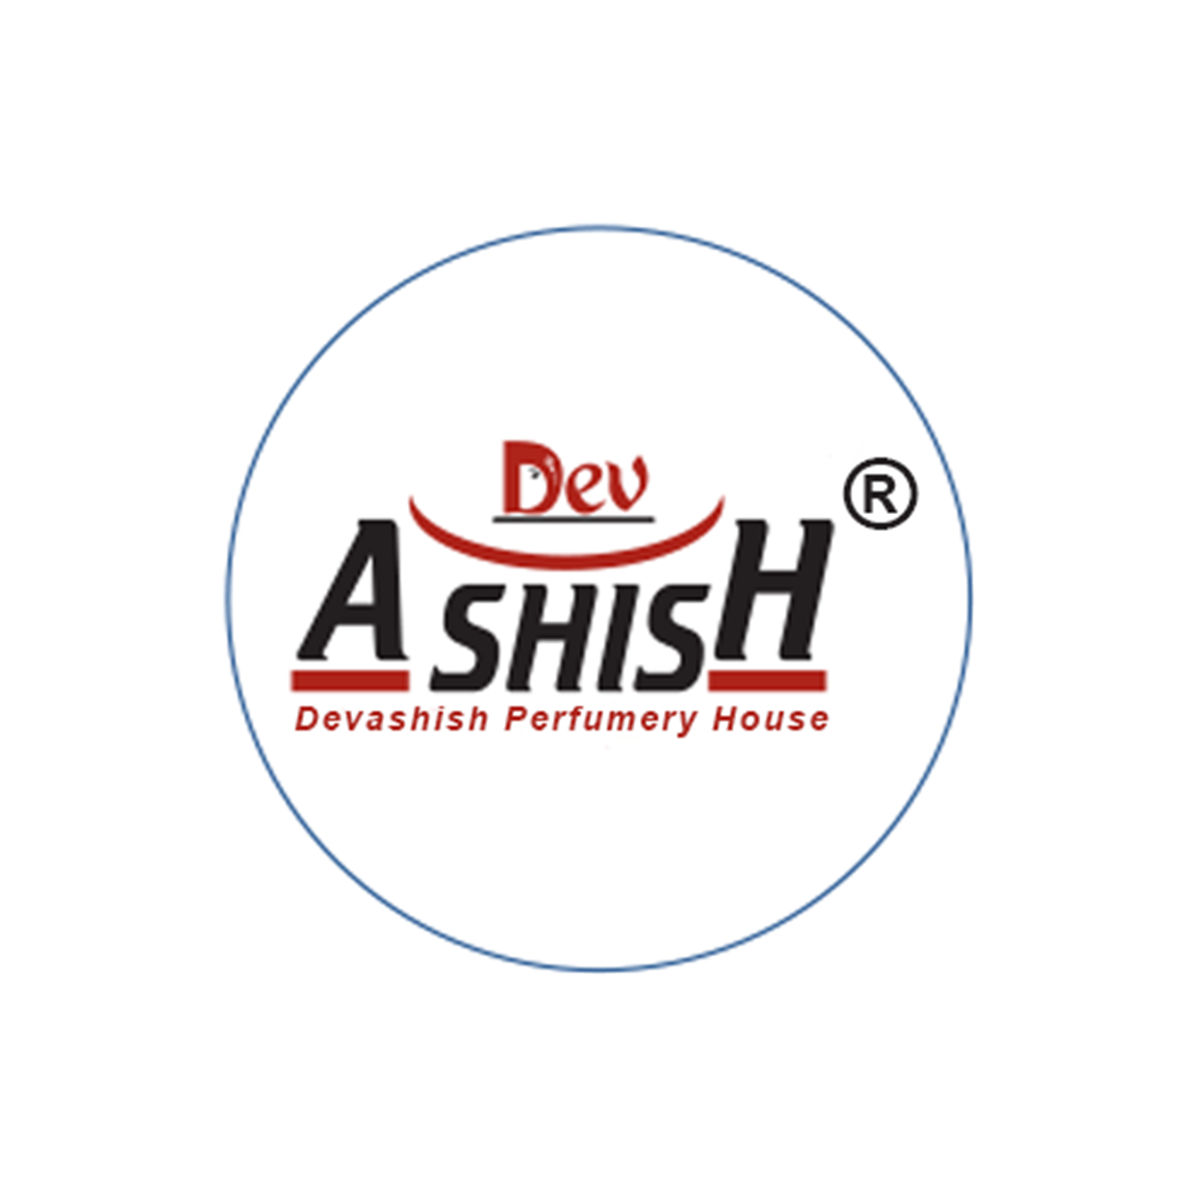 DEVASHISH PERFUMERY <P> NOTE: Correct name of the subject is “DEV ASHISH PERFUMERY HOUSE